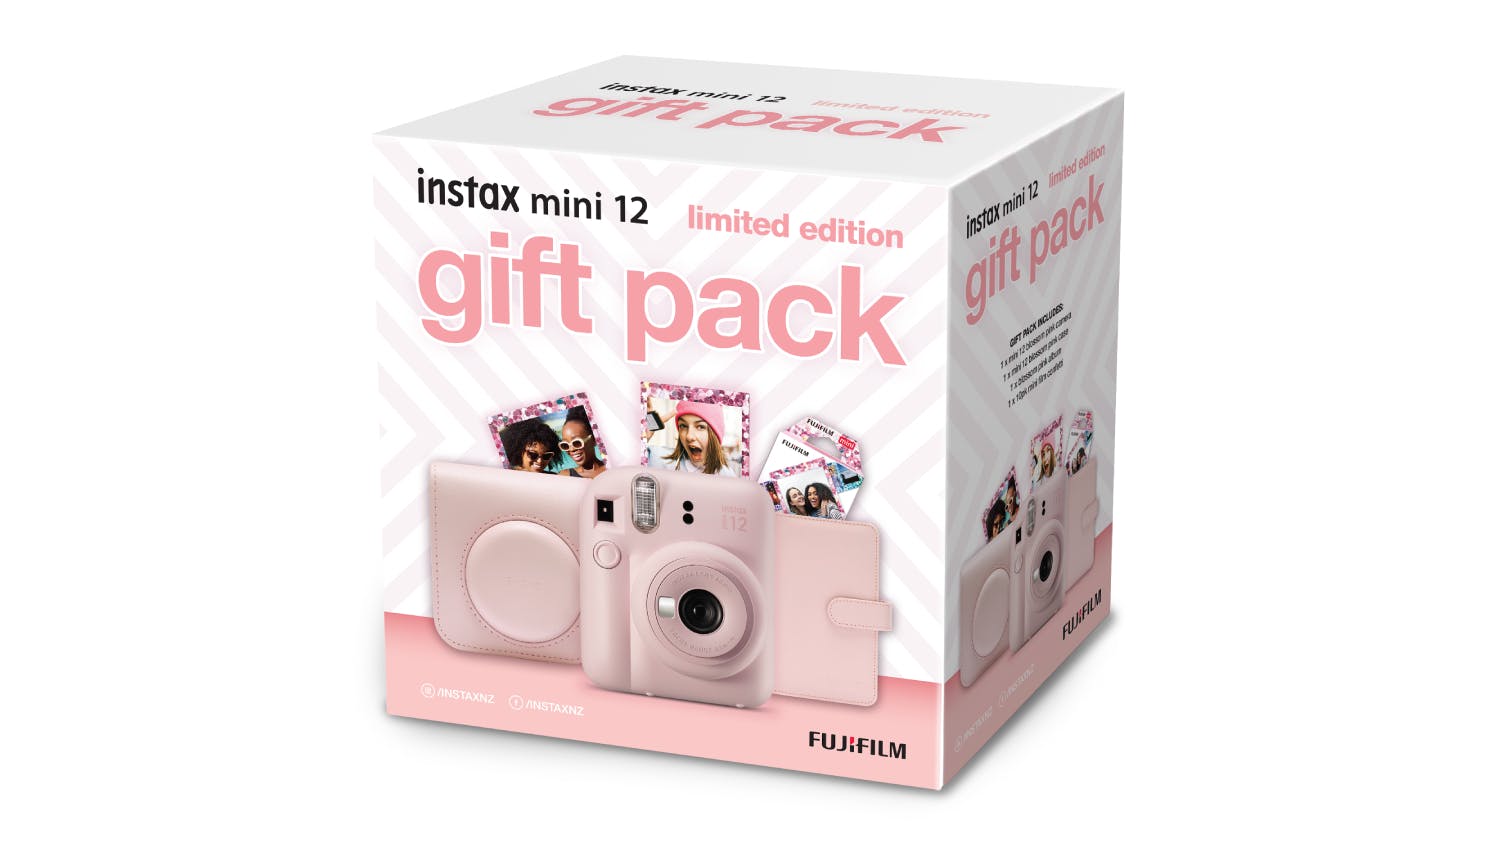 Fujifilm Instax Mini 12 Instant Film Camera - Blossom Pink + Film + Case,  Bundle